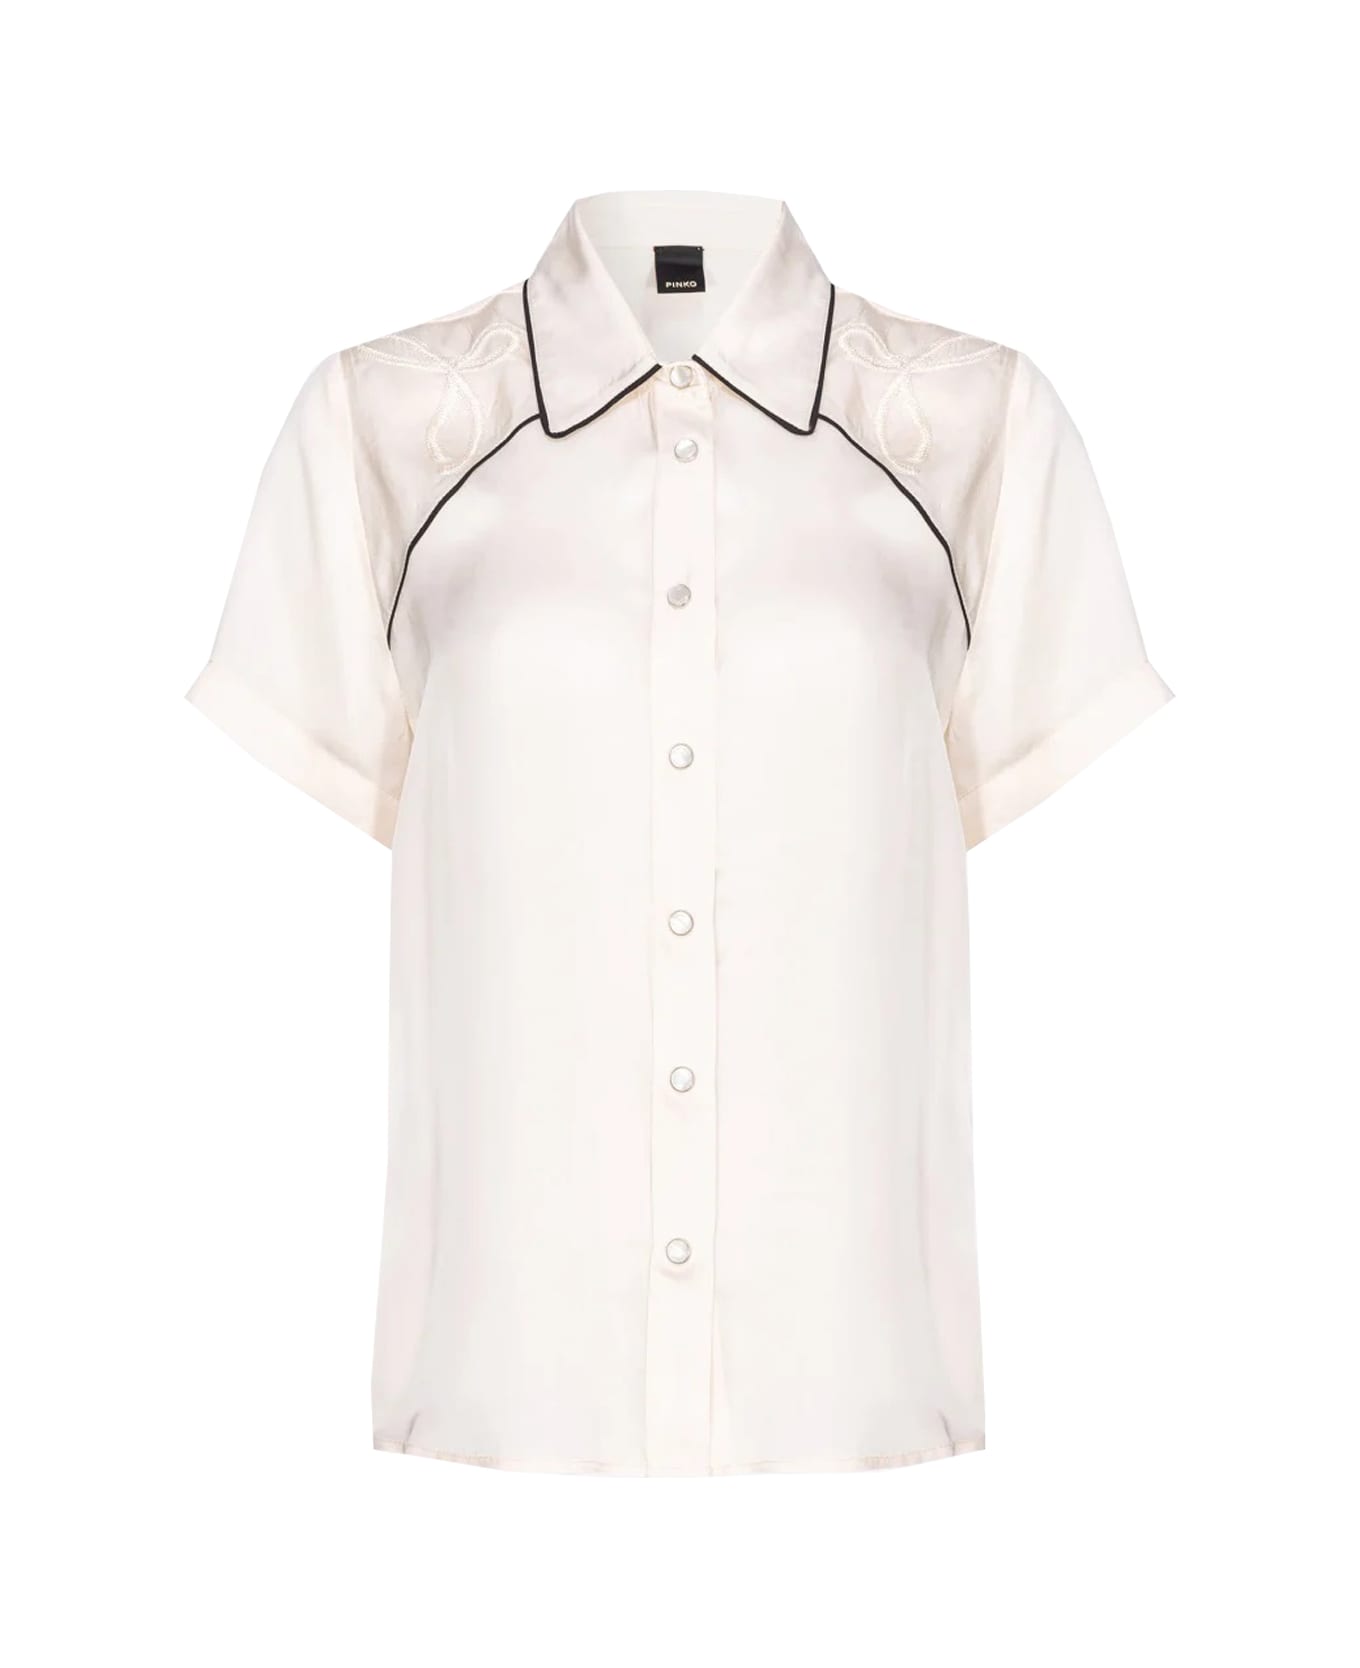 Pinko Shirt - White